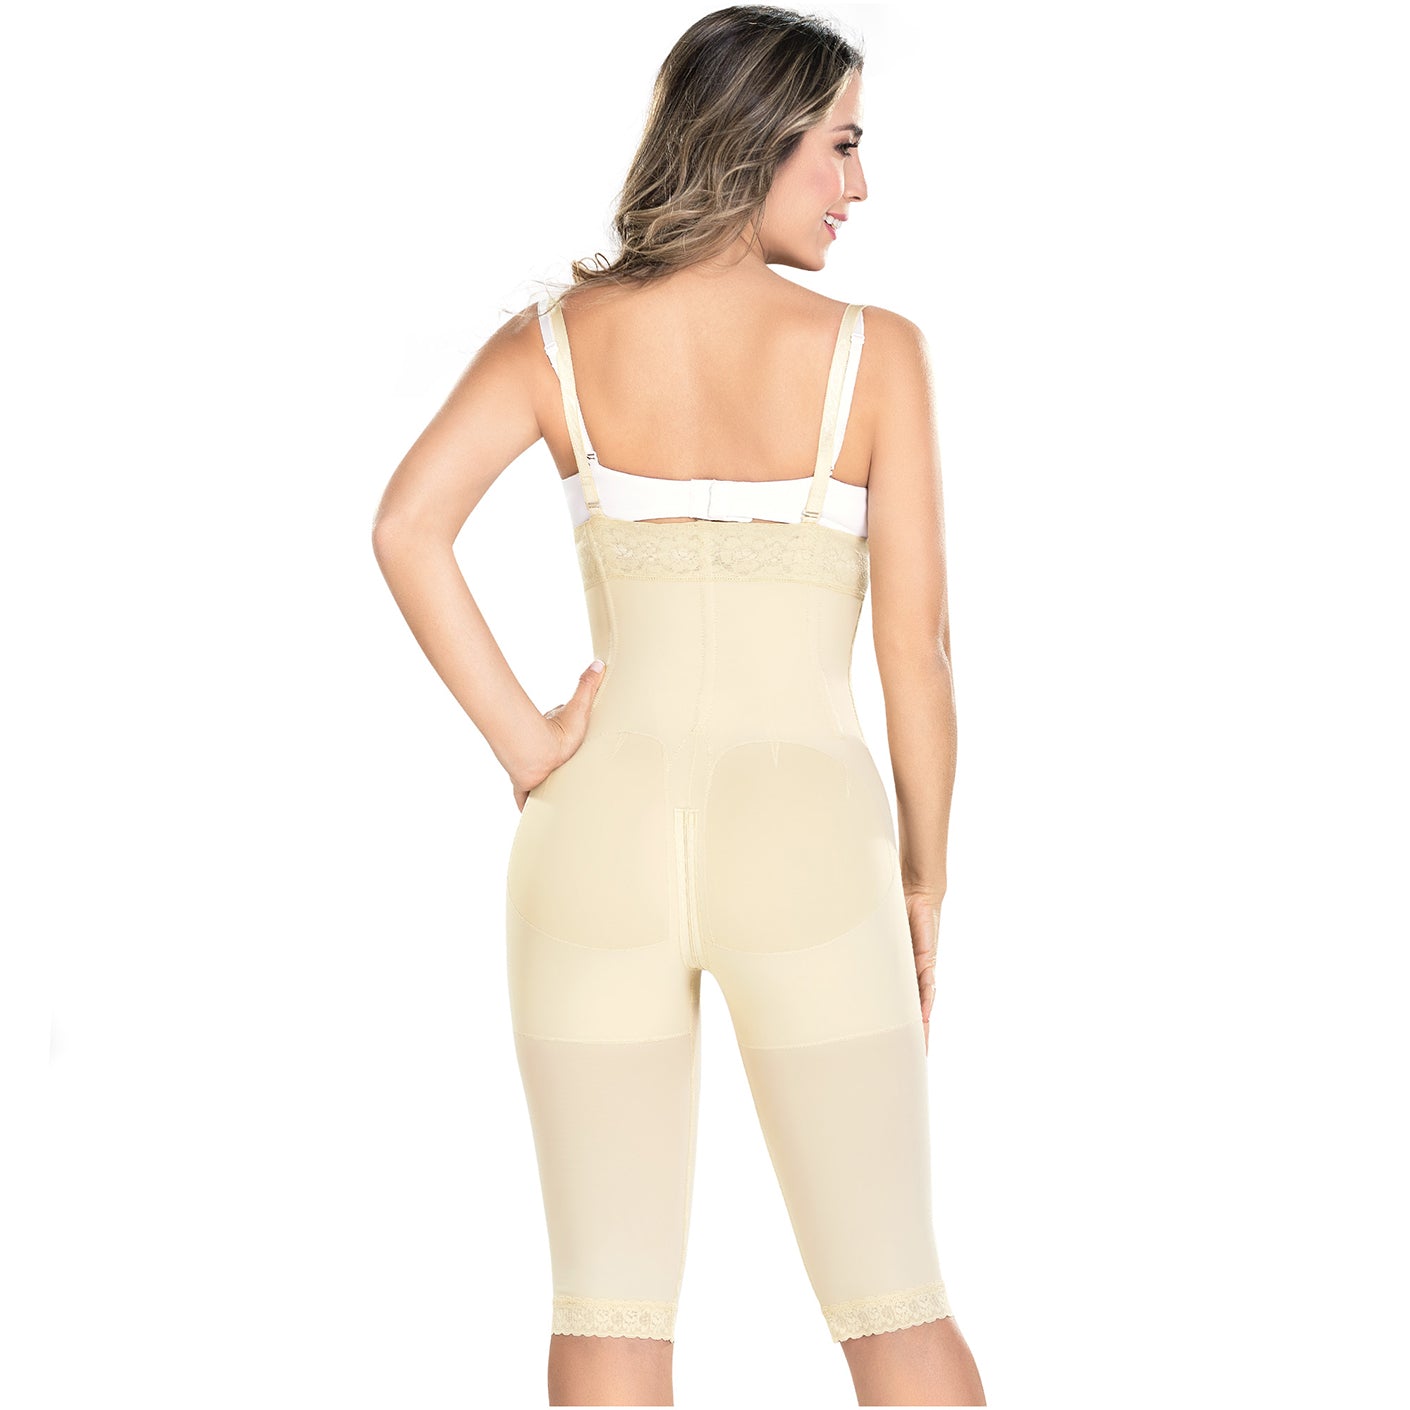 Diane & Geordi 002407, Women's Strapless Bodysuit Tummy Control Shapewear